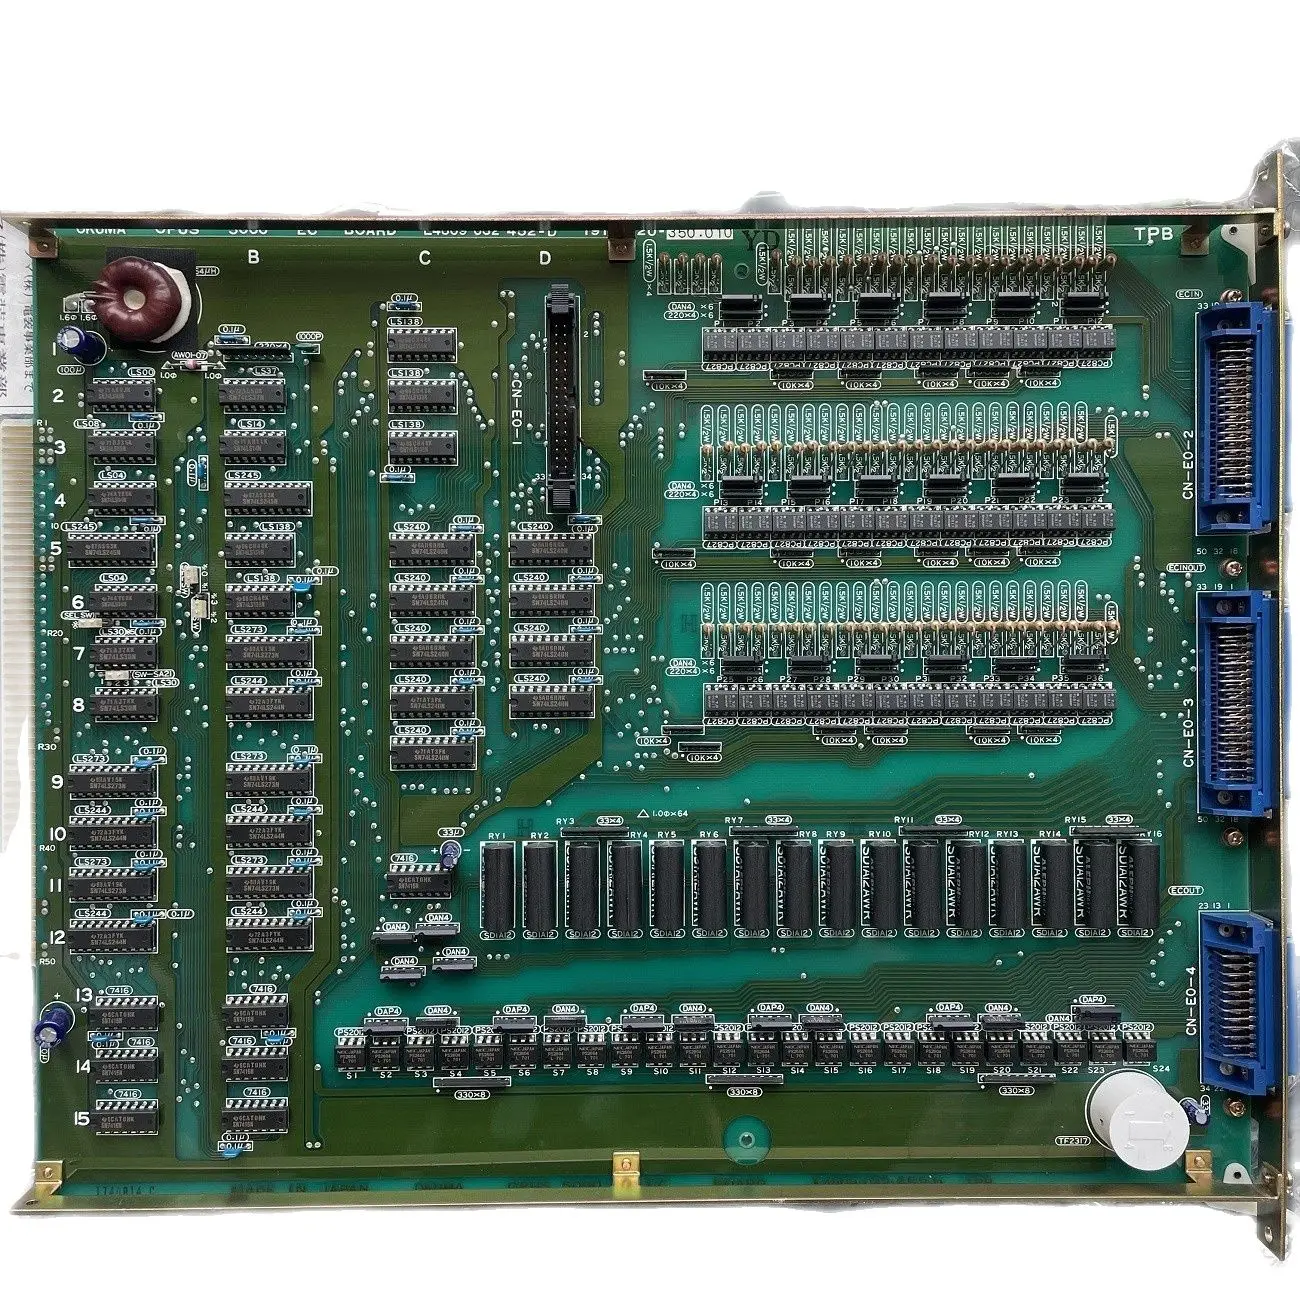 

E4809-045-091-B OKUMA Board Numerical CNC Control Drive Board Warranty 3 Months